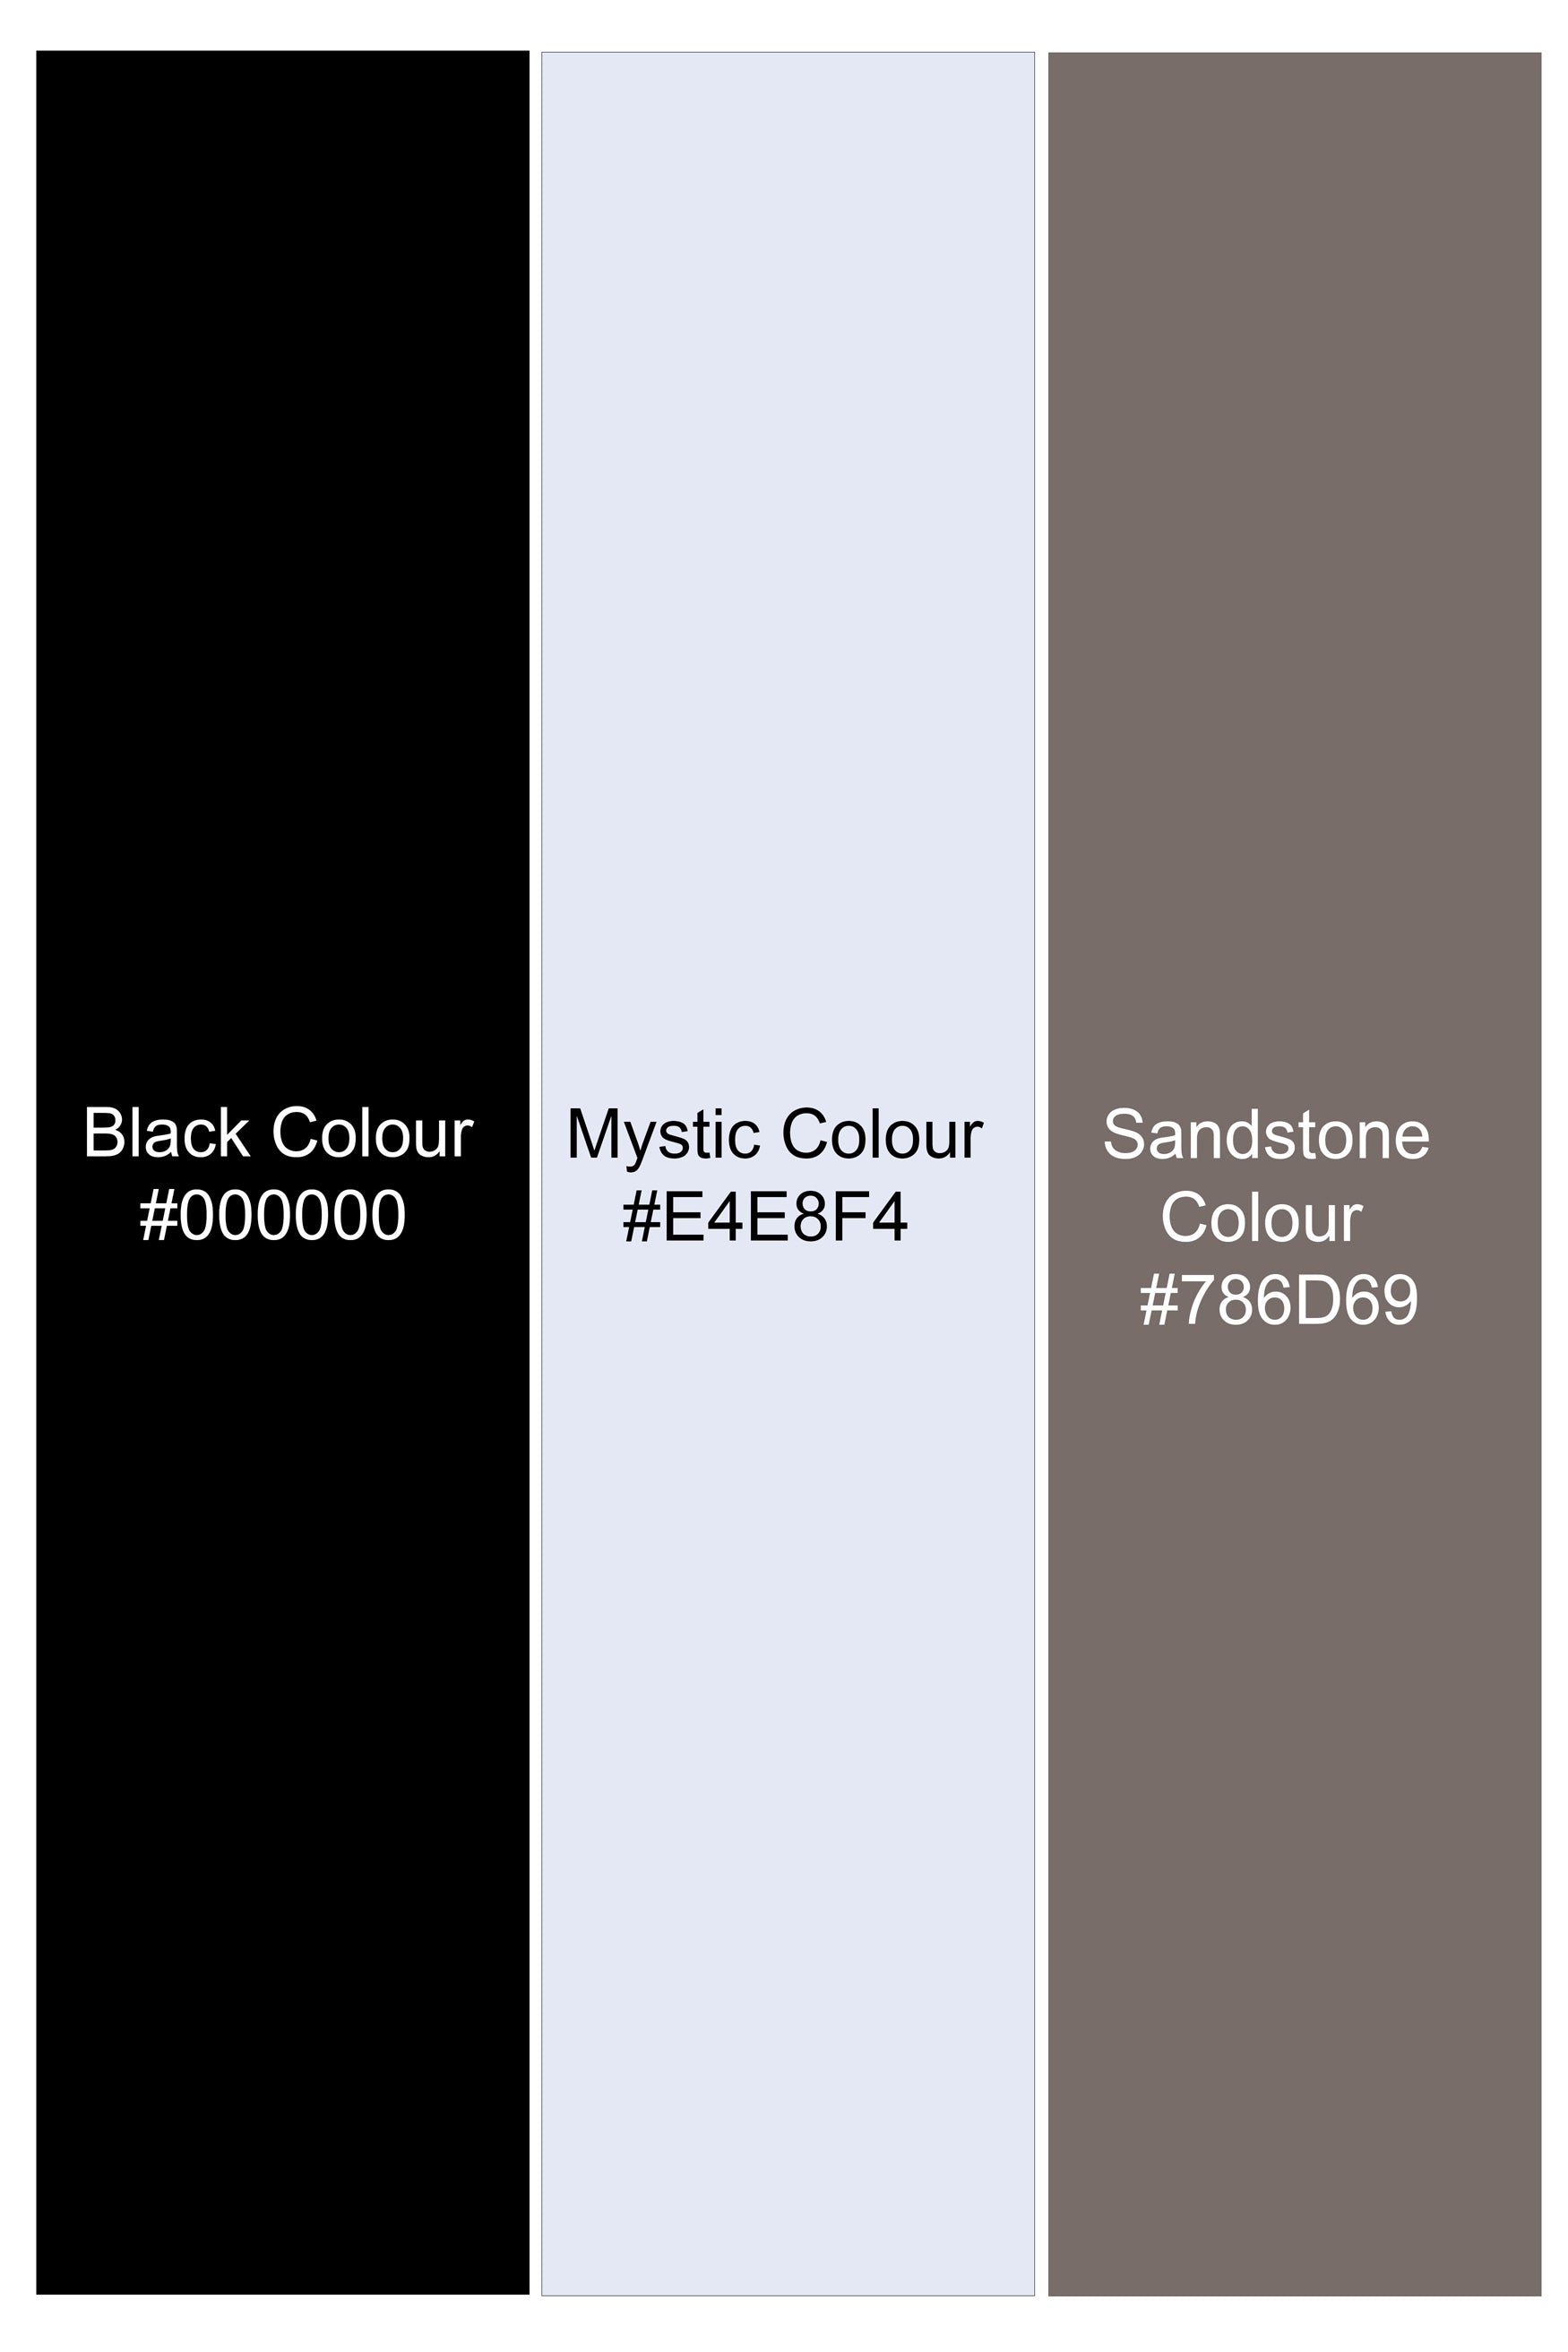 Jade Black and Mystic Gray Floral Printed Premium Tencel Shorts SR401-28, SR401-30, SR401-32, SR401-34, SR401-36, SR401-38, SR401-40, SR401-42, SR401-44